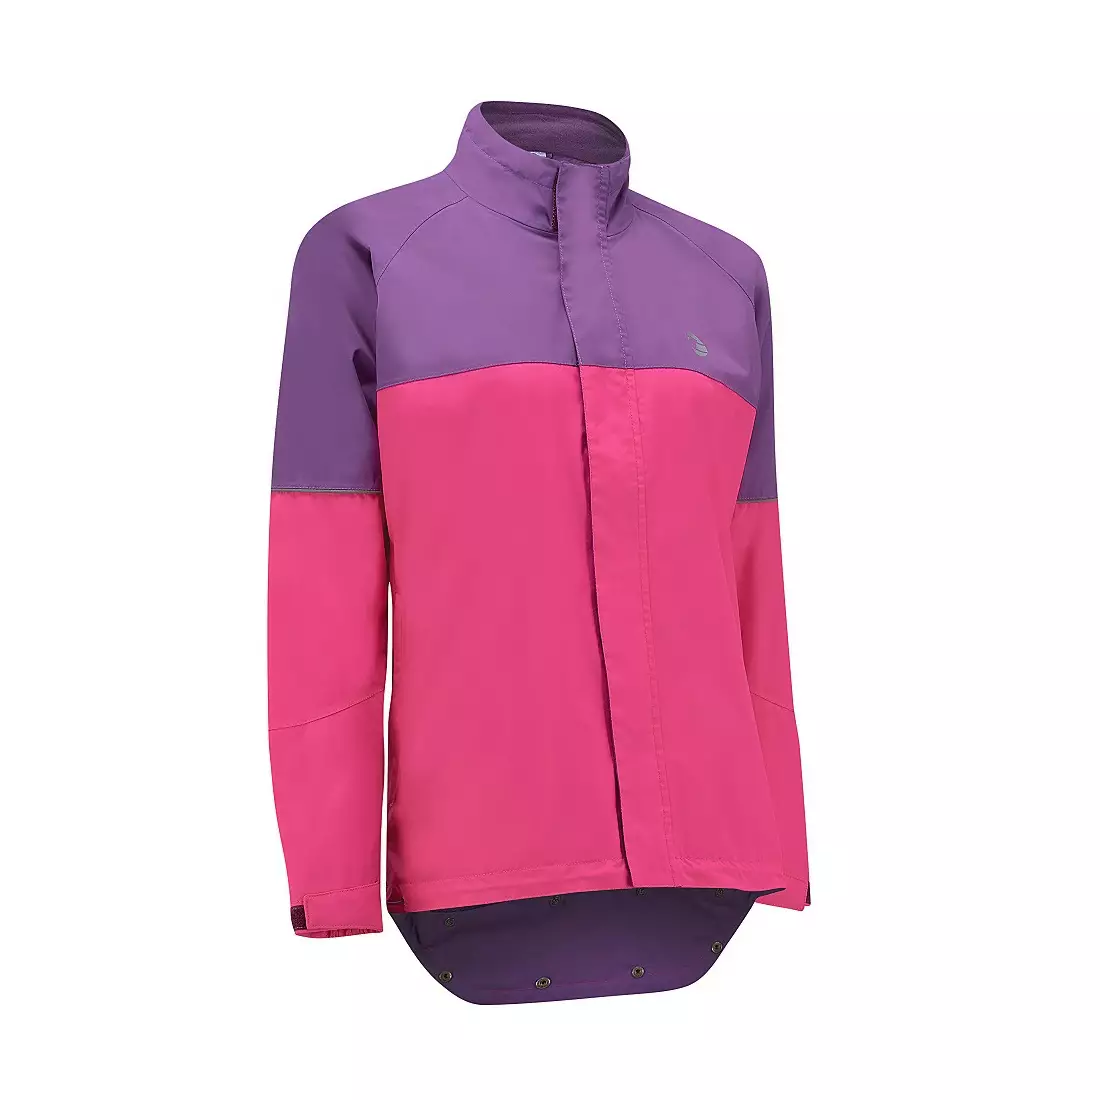 TENN OUTDOORS VISION women's cycling jacket, rainproof